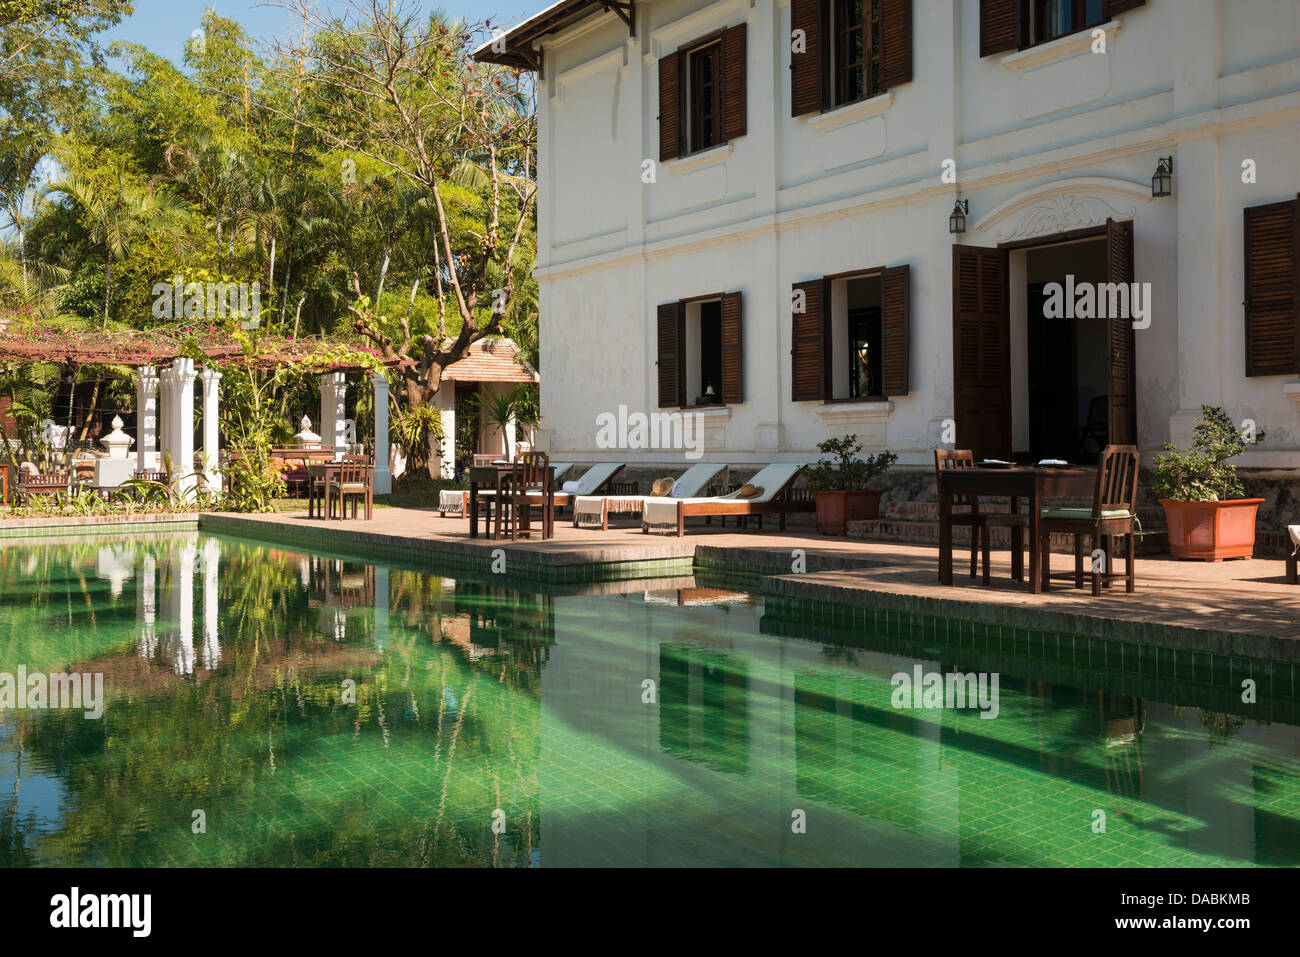 Satri House Hotel, Luang Prabang, Laos, Indochina, Southeast Asia, Asia Stock Photo